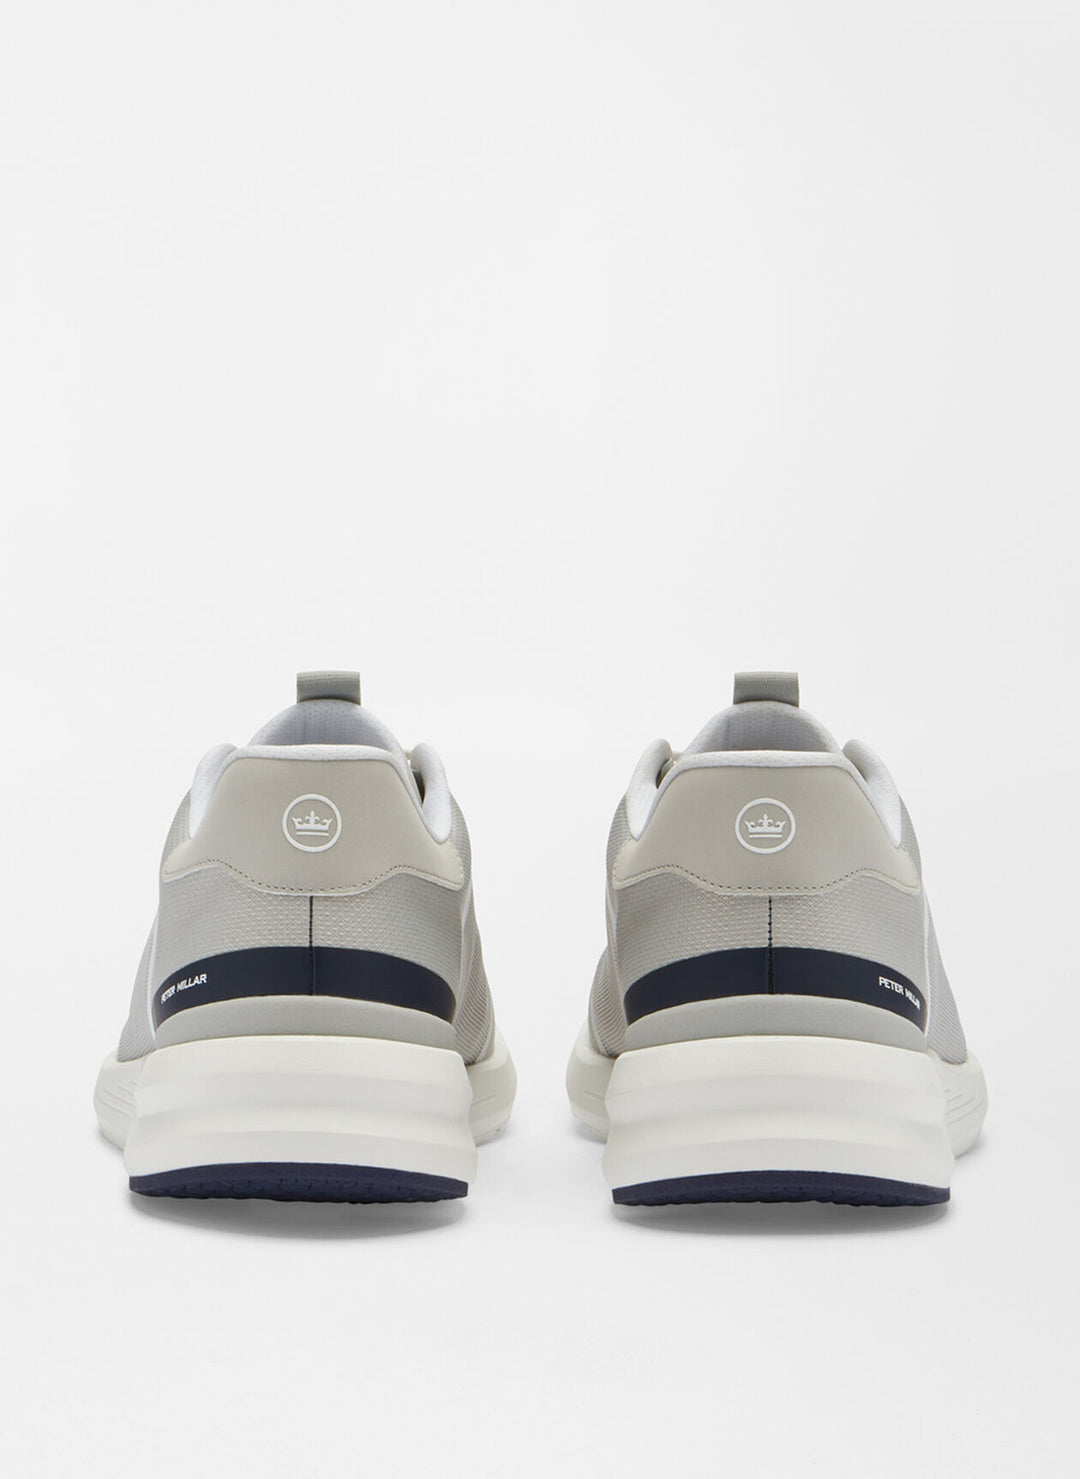 Peter Millar Camberfly Sneaker In British Grey